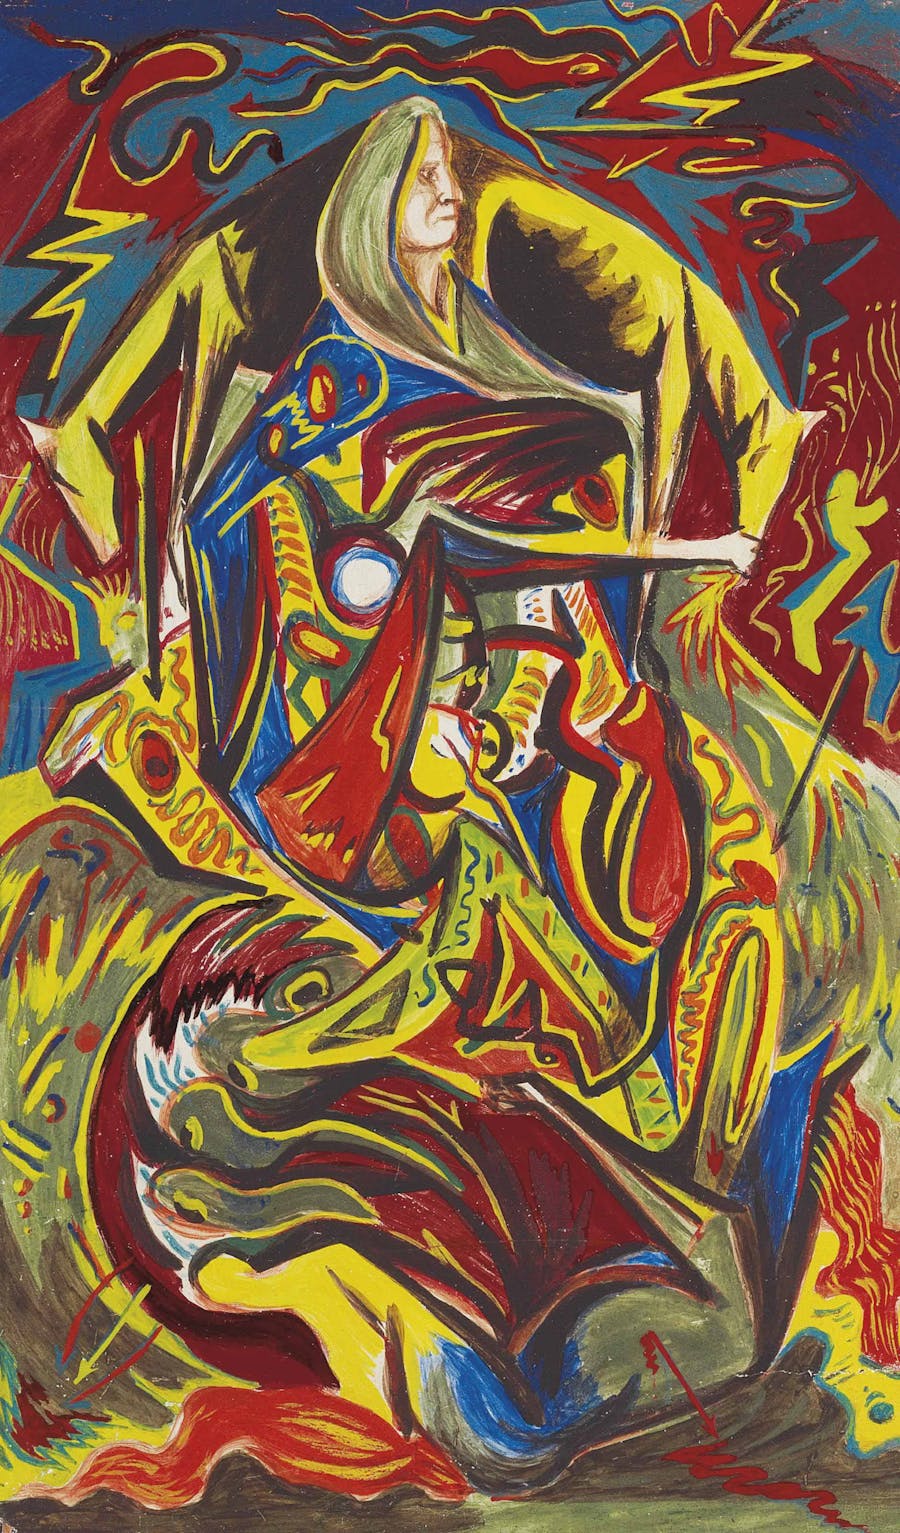 Jackson Pollock, ‘Composition with Woman’, 1938-1941, oil on masonite. Photo © Christie’s